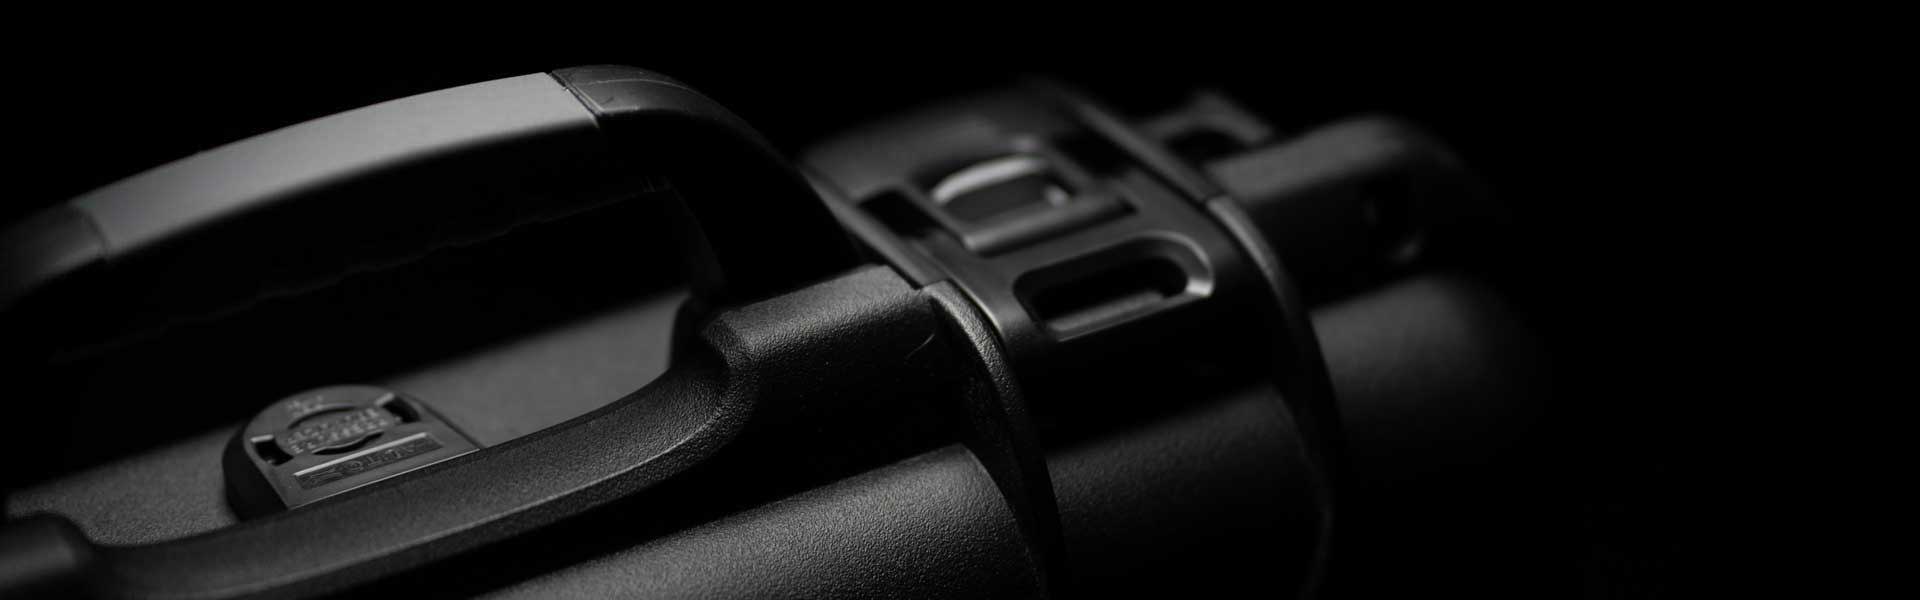 NANUK 909 Pistole valise für Glock® Verkauft Online - NANUK Europa